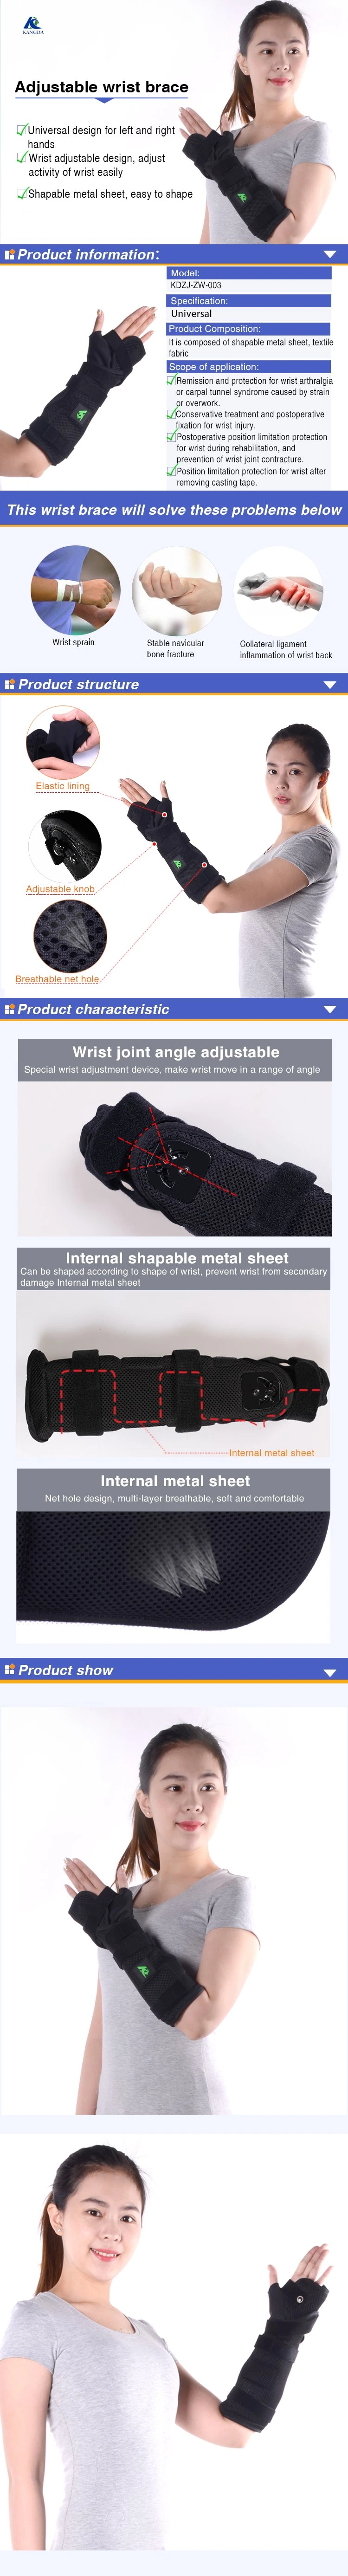 Breathable Neoprene Wrist Brace Night Sleep Splint Adjustable Brace for Carpal Tunnel, Tendonitis and Arthritis Pain